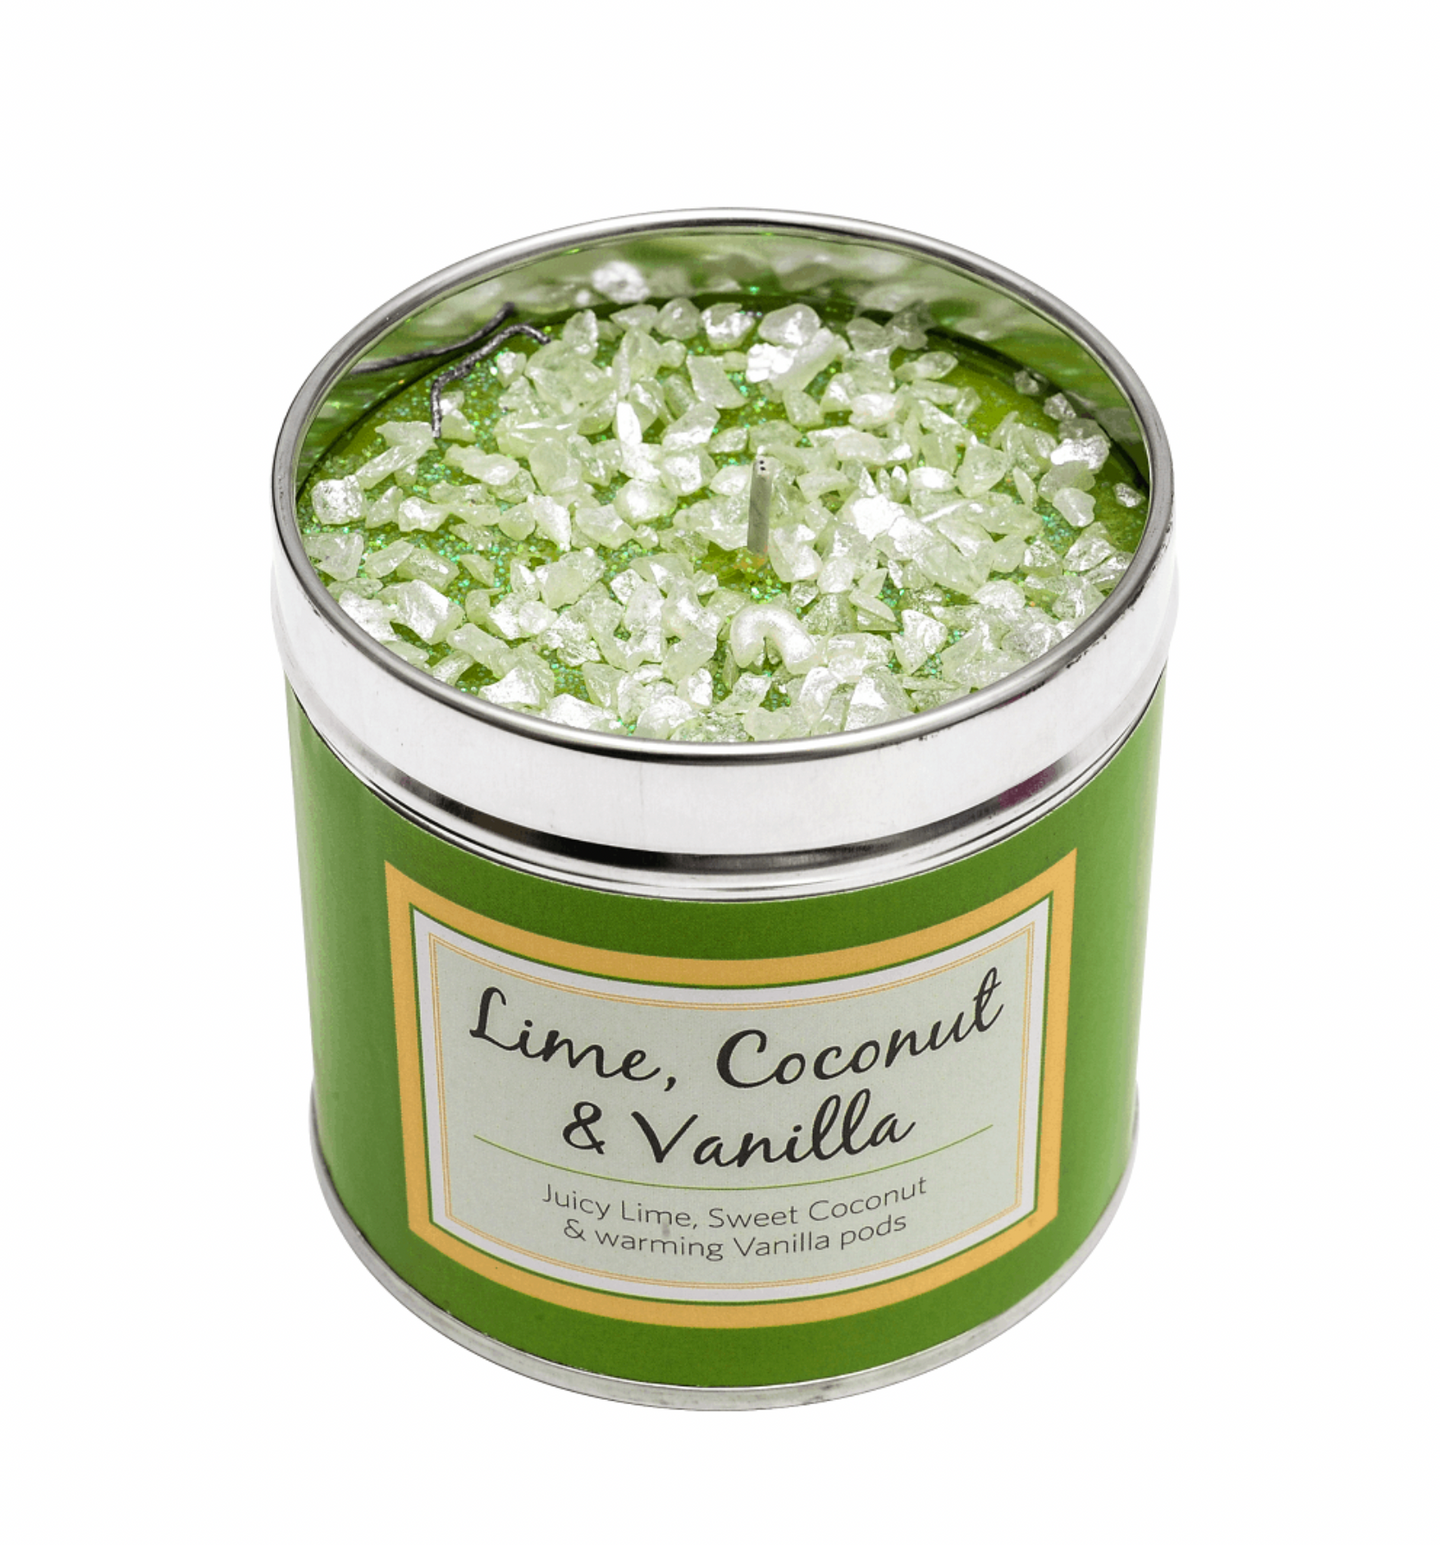 Best Kept Secrets Candle - Lime, Coconut & Vanilla